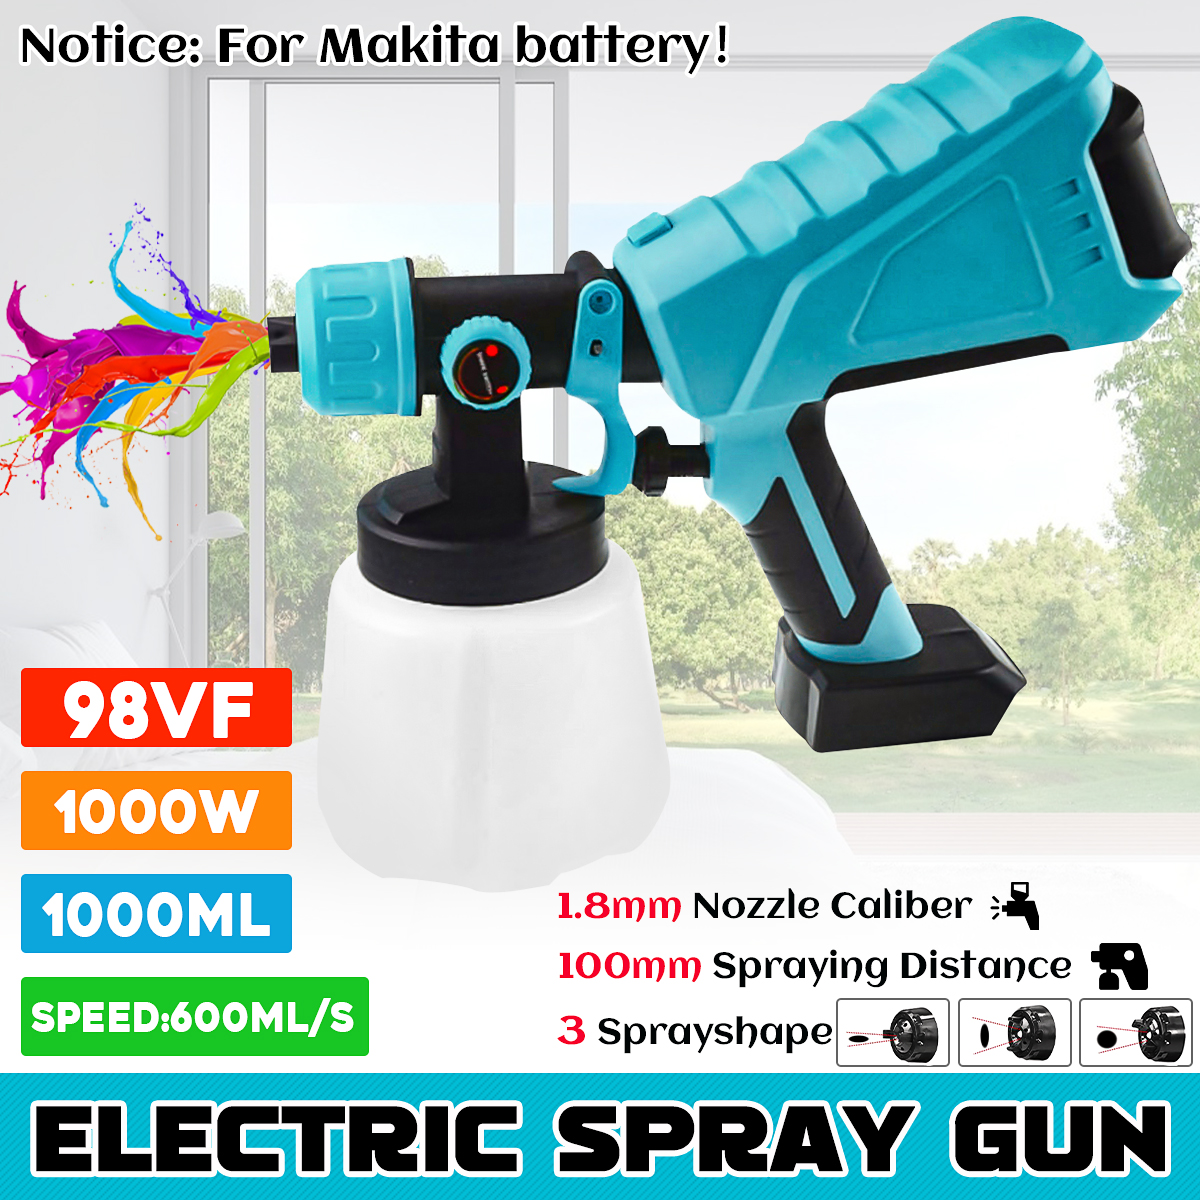 1000ML-Cordless-Rechargeable-Electric-Paint-Sprayer-W-Adjustment-Knob-Spray-Guns-For-Makita-18V-Batt-1892279-1